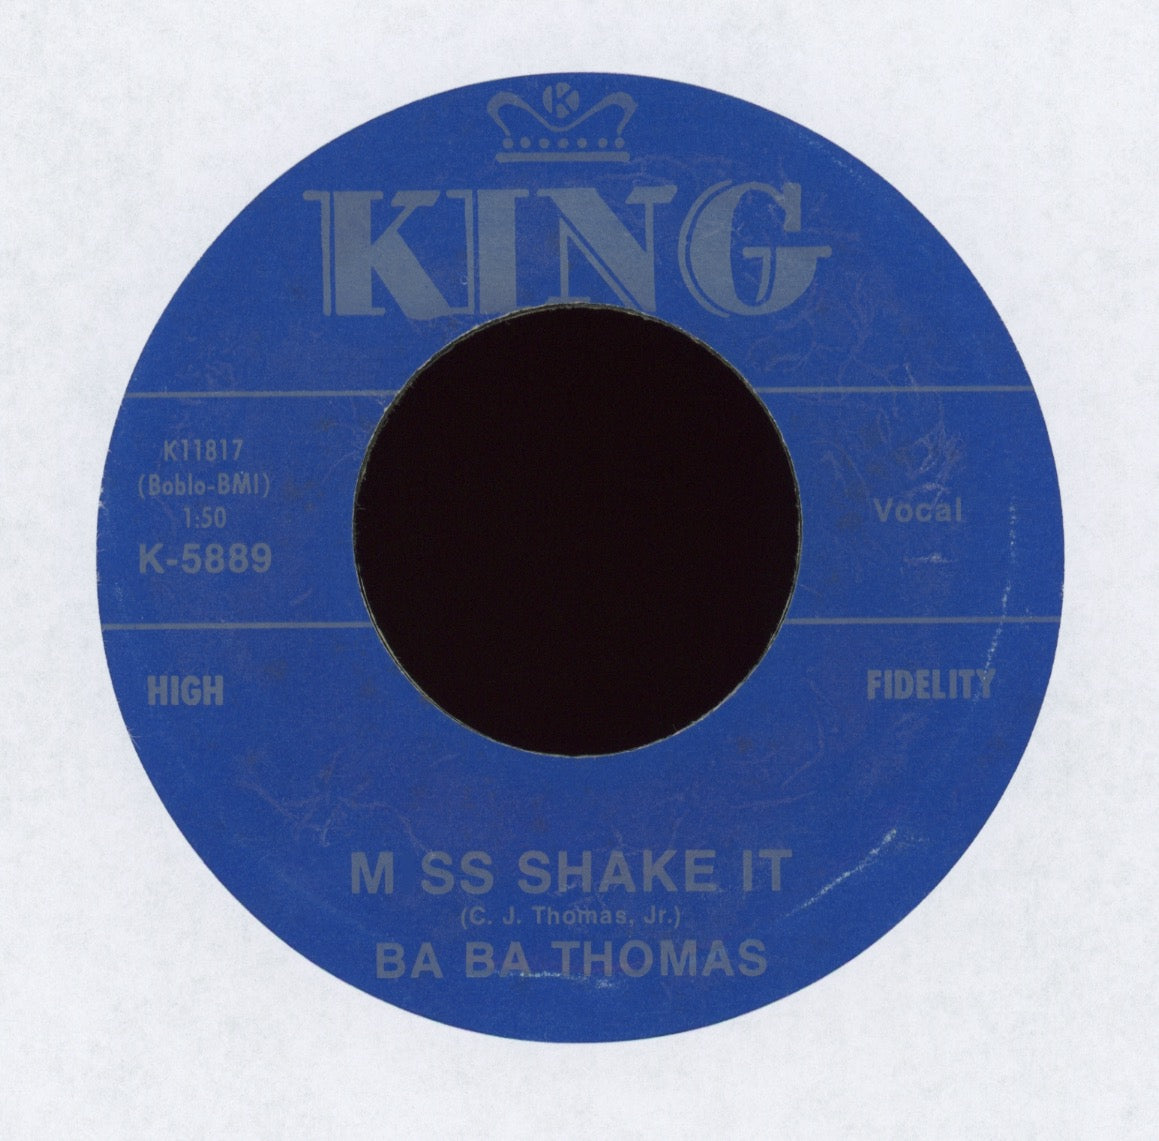 Ba Ba Thomas - Miss Shake It on King 1970's Pressing